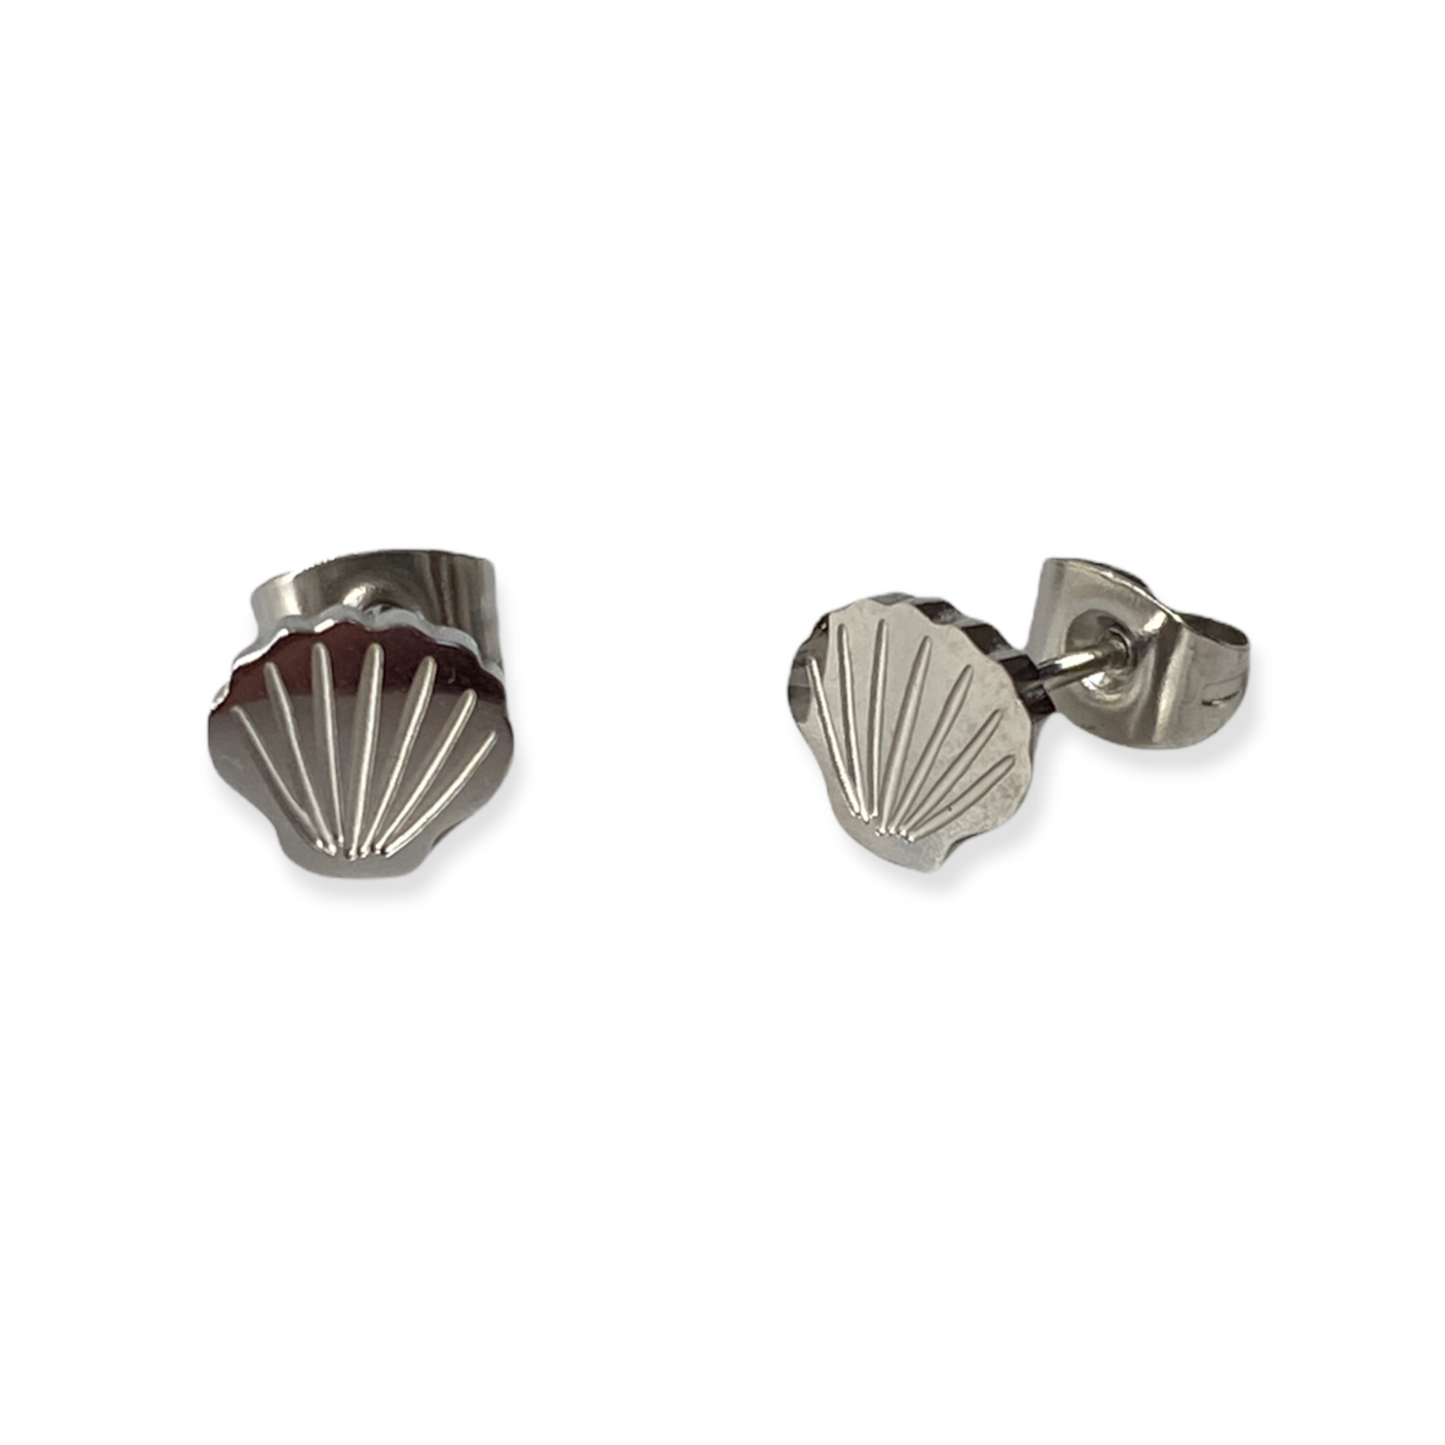 Shell Earring Studs Silver